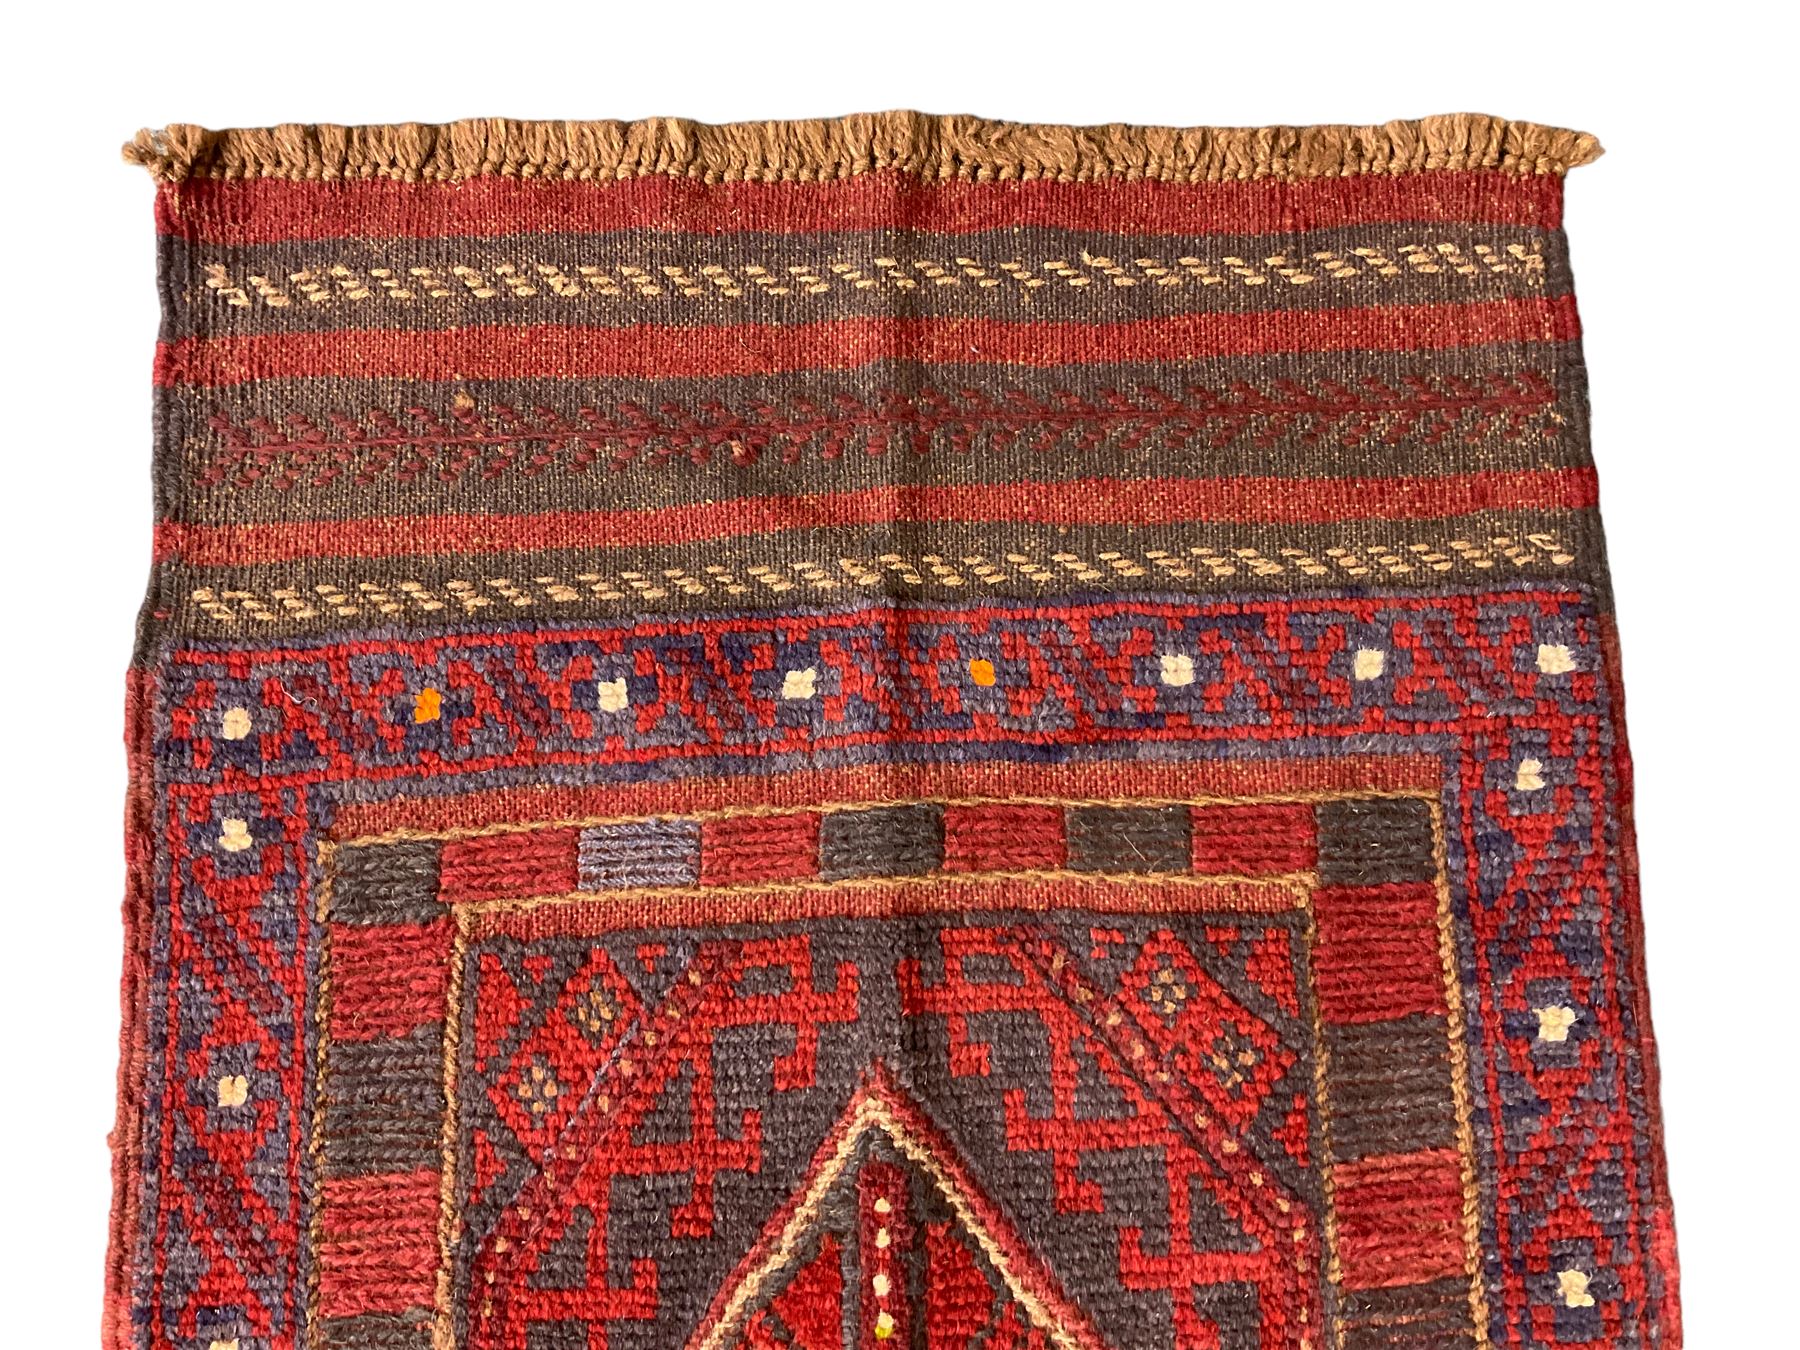 Meshwani Kilim maroon ground runner rug - Image 2 of 5